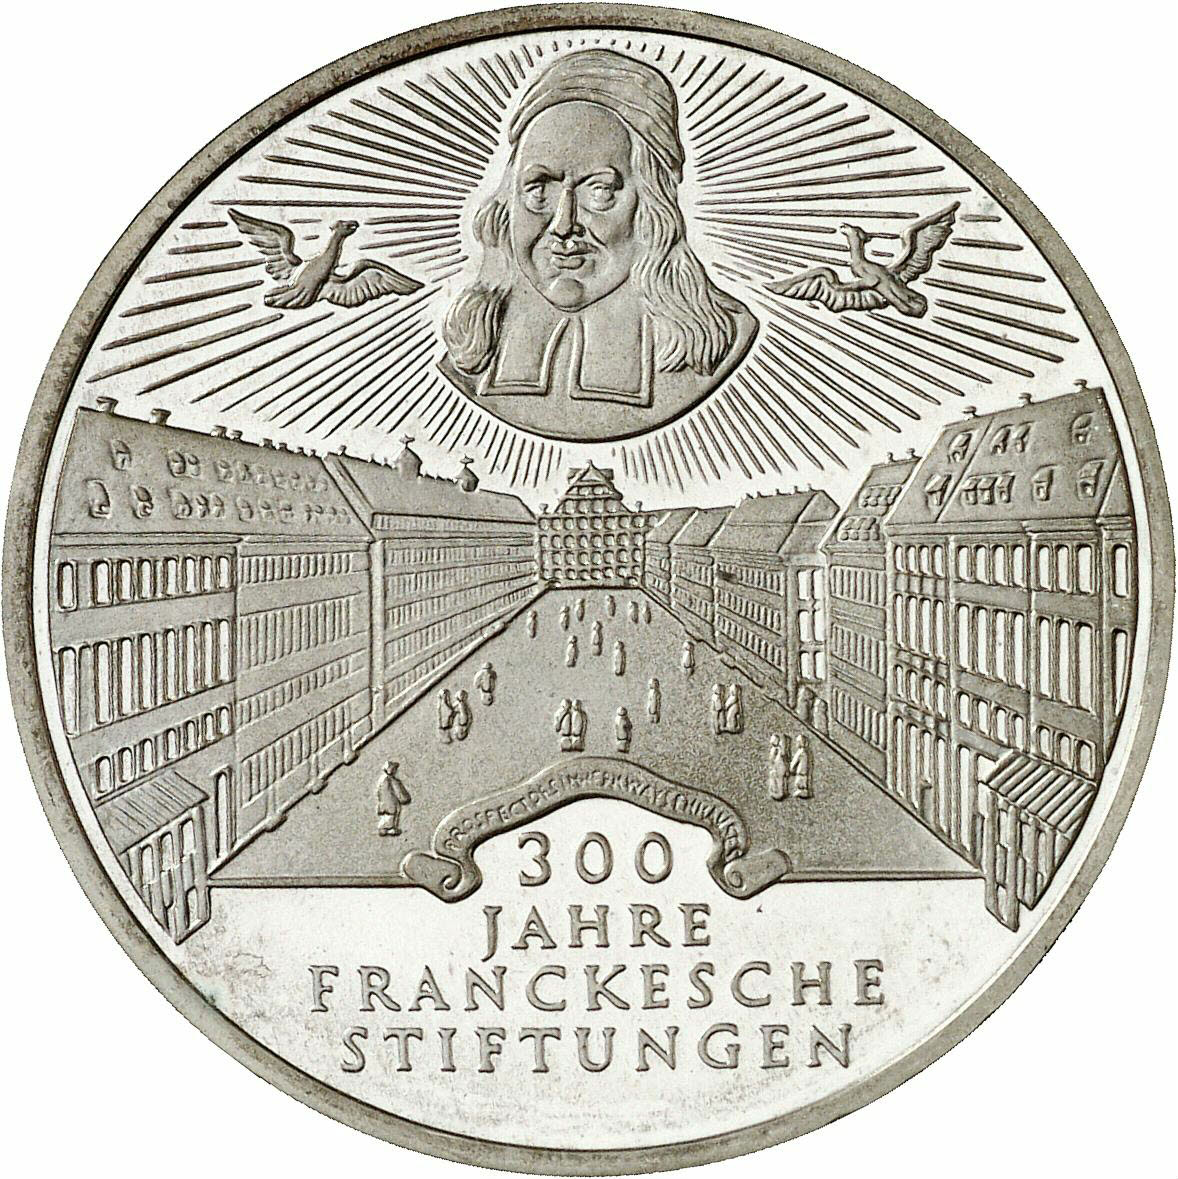 DE 10 Deutsche Mark 1998 A